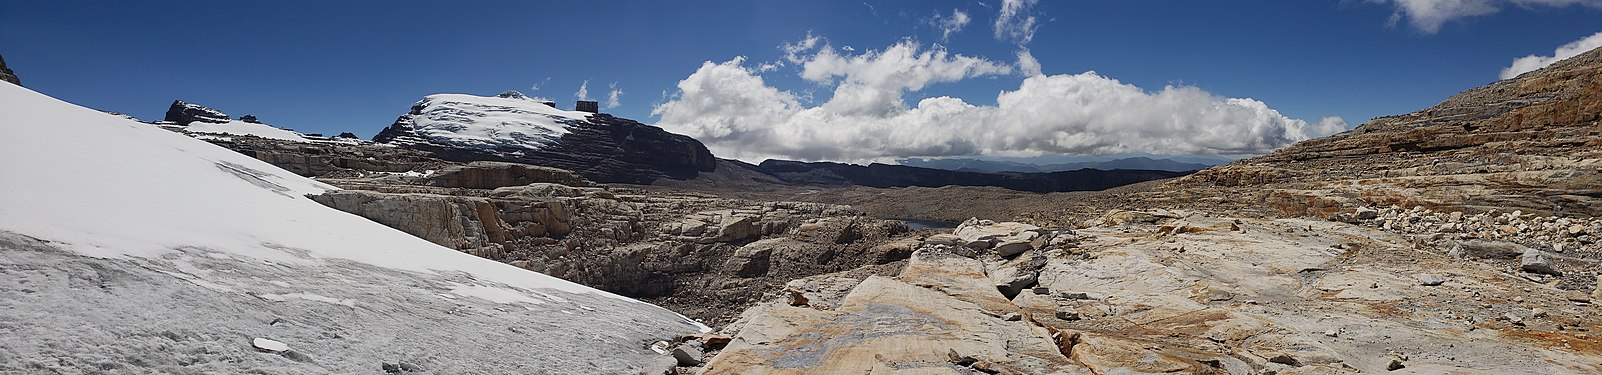 Panoramic view of El Cocuy National Natural Park Photographer: GGmaster22